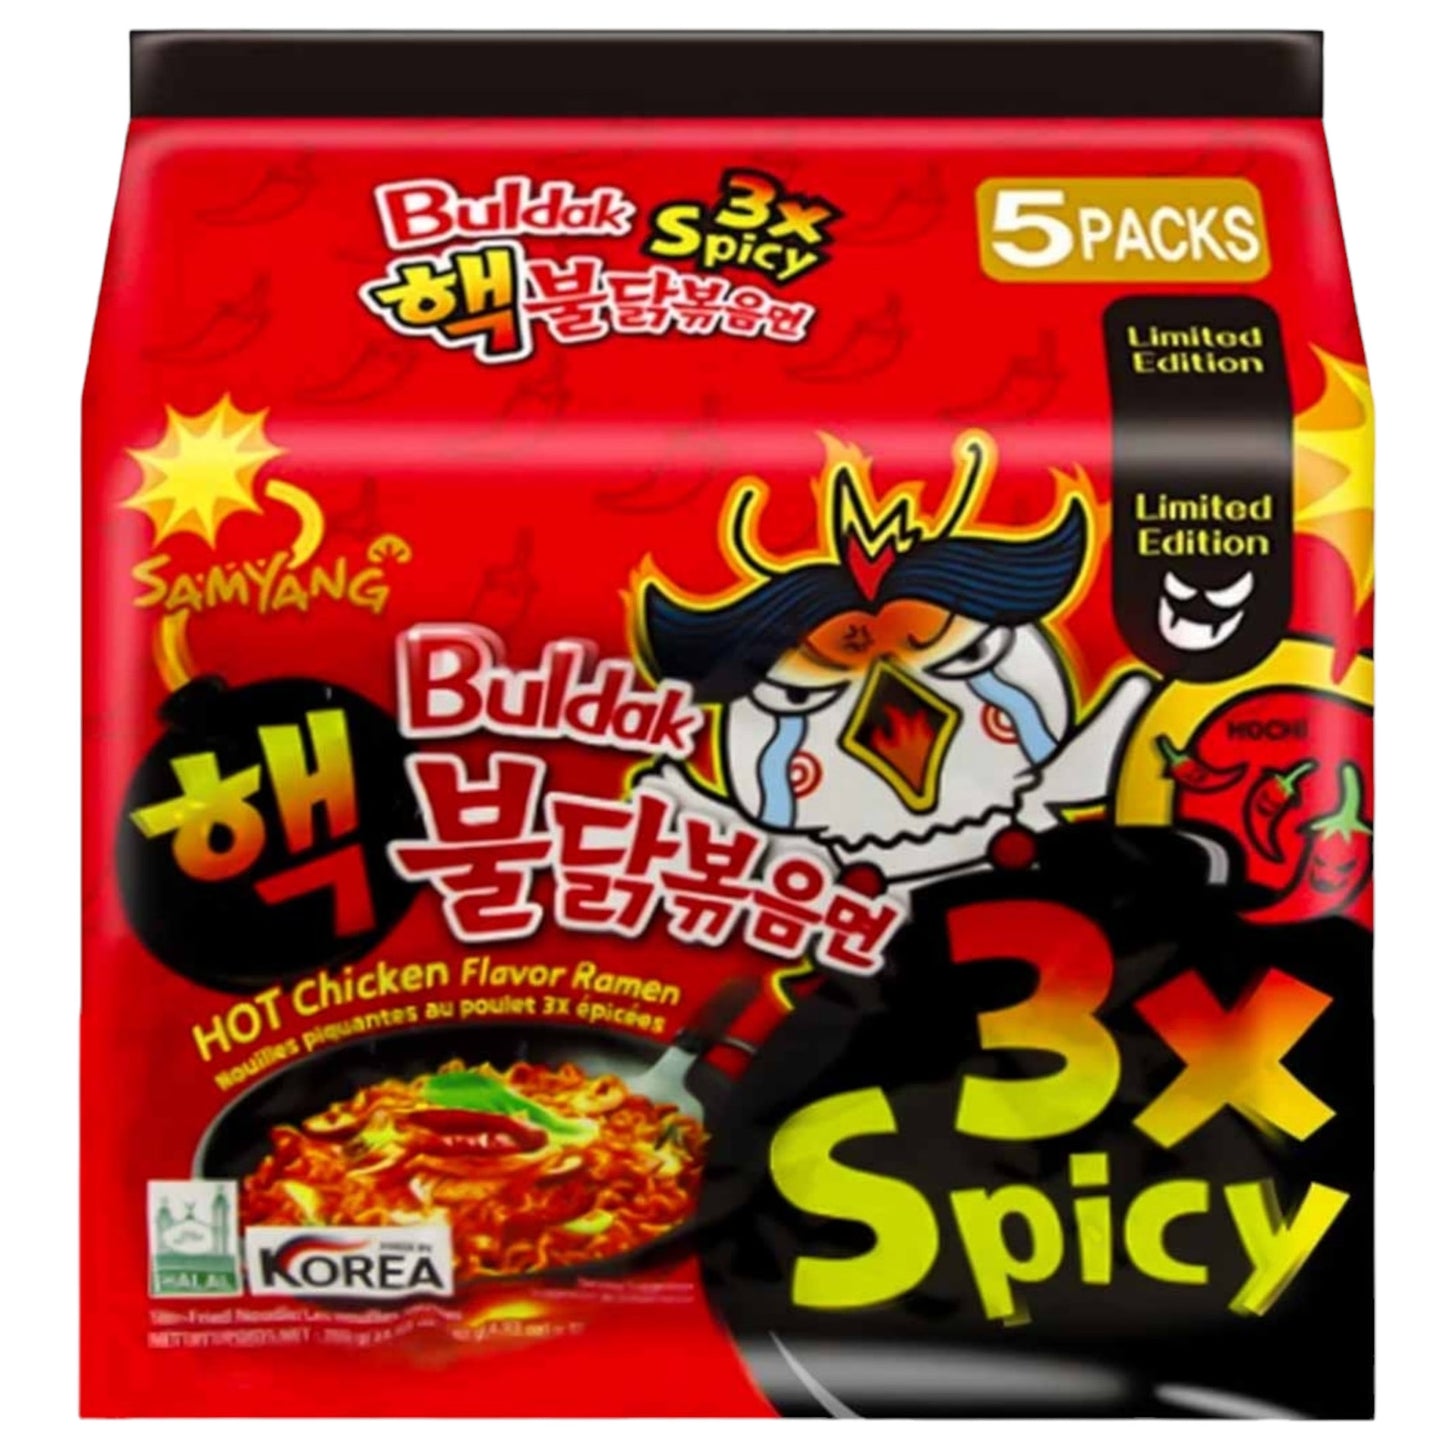 Samyang Buldak 3x Spicy Hot Chicken Ramen | 8x5x140g